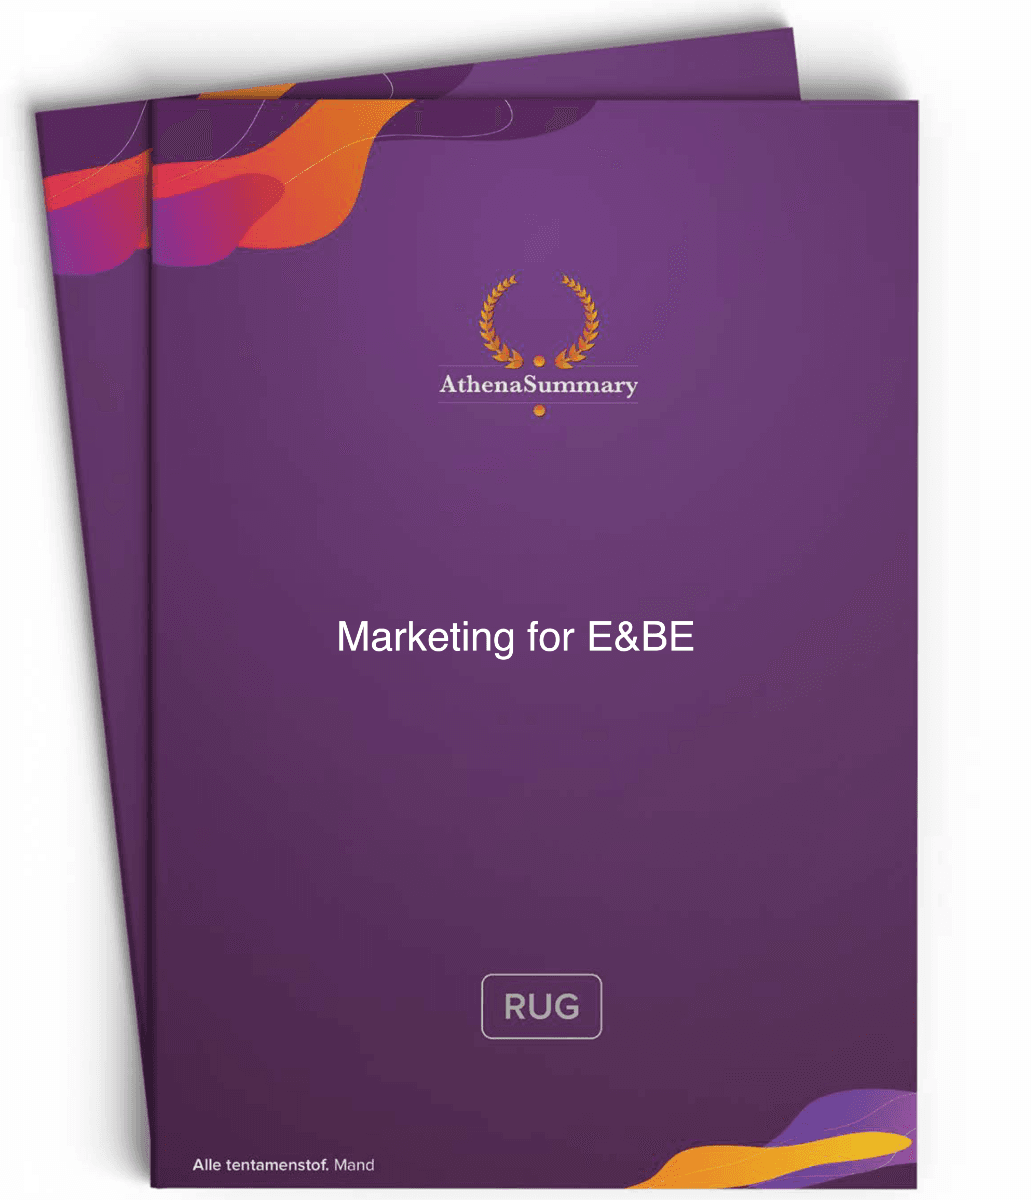 Literature Summary: Marketing for E&BE